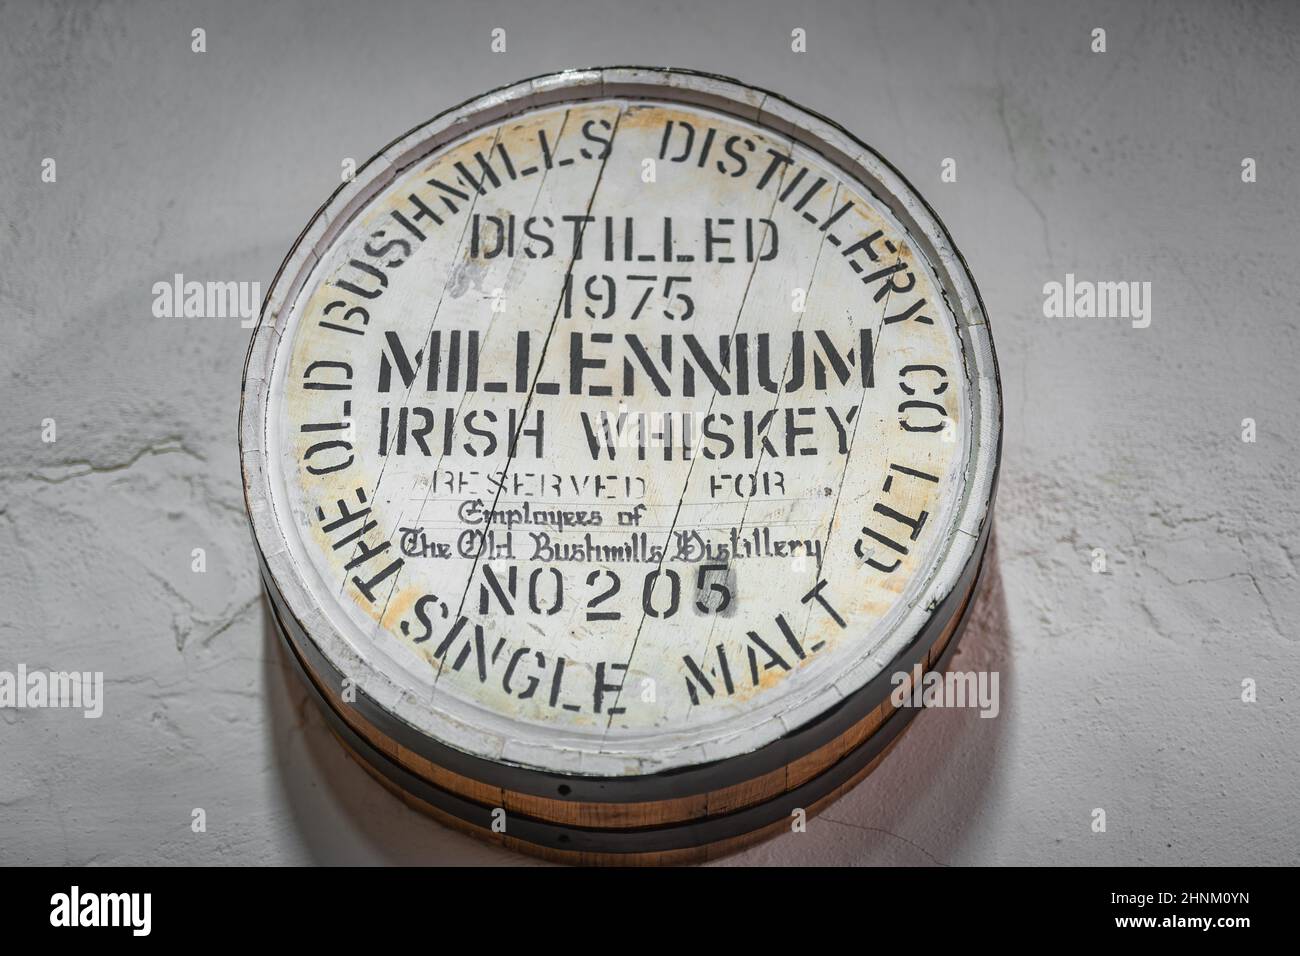 Millennium Irish whiskey sign in Old Bushmills Distillery on wooden barrel Stock Photo